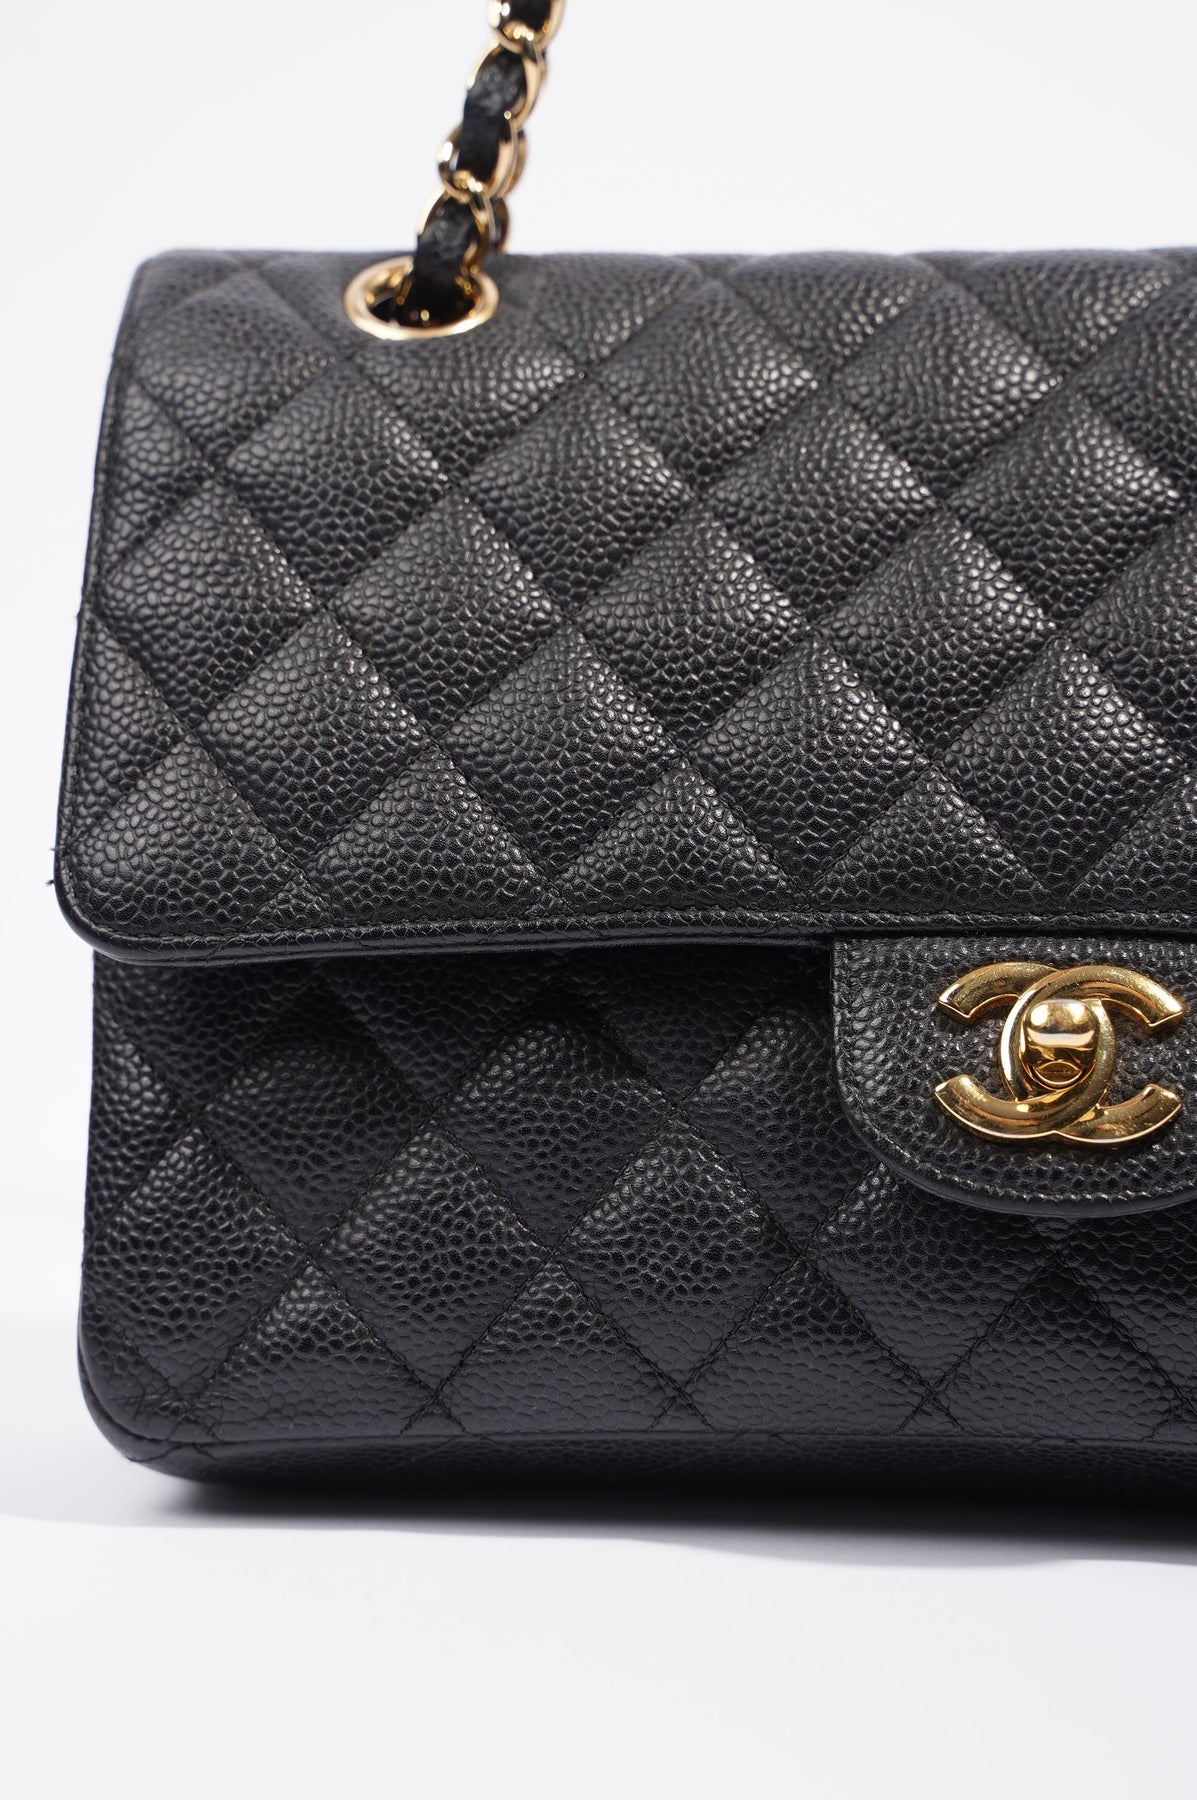 Chanel Classic Medium Double Flap, Dark Grey Caviar Leather with Gold  Hardware, New in Box GA003